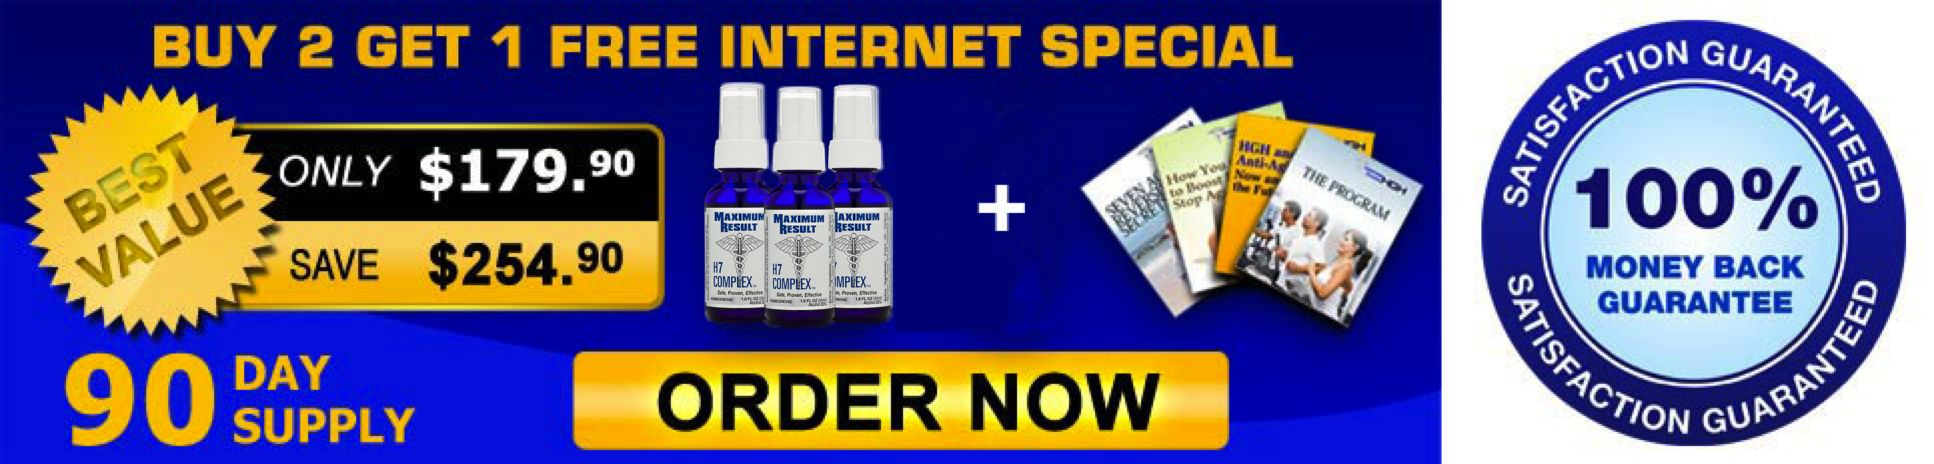 Buy 2 Get 1 Free Internet Special